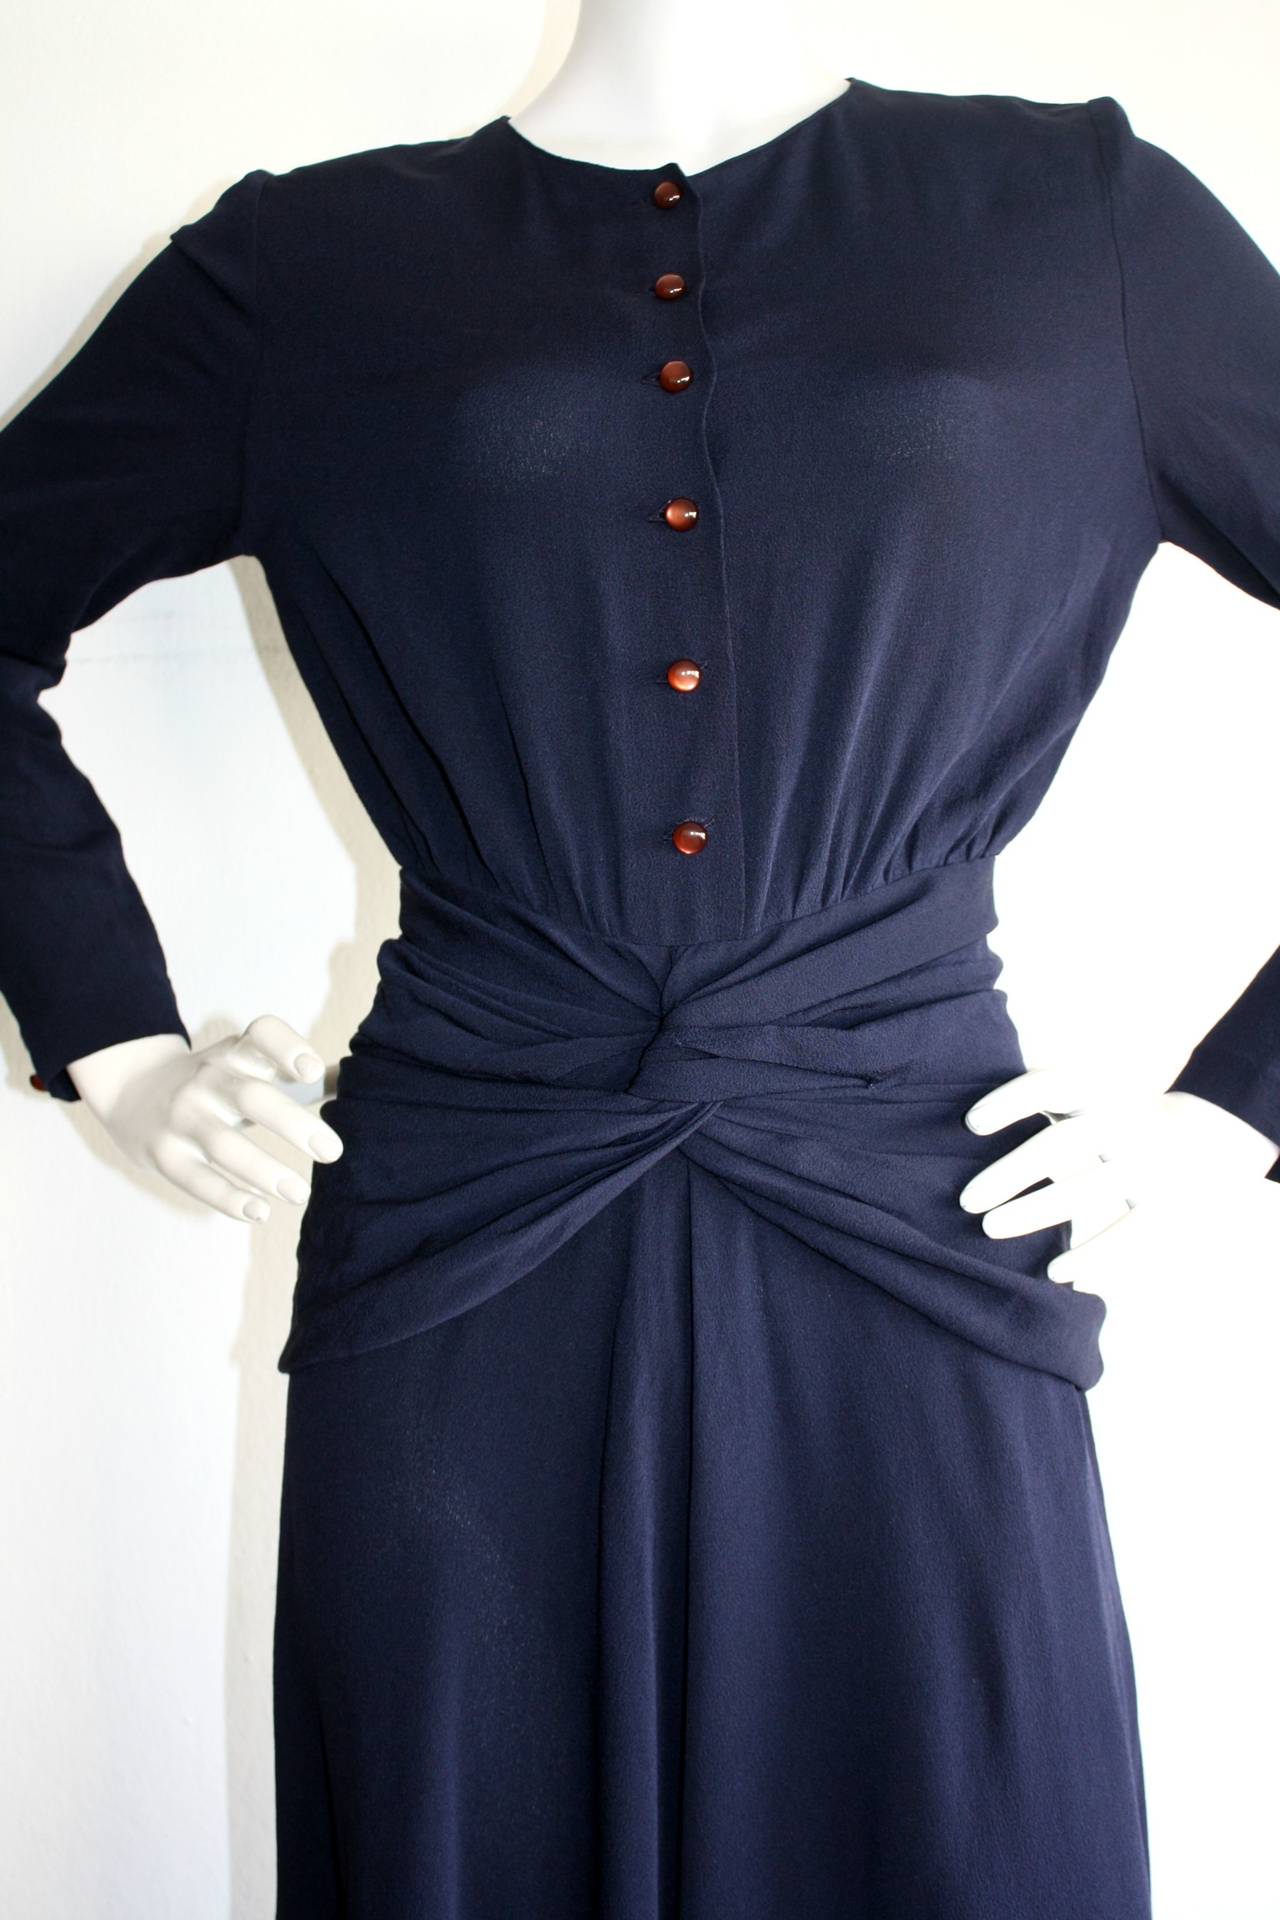 Black Vintage Chloe by Karl Lagerfeld 1930s Style Navy Blue Dress